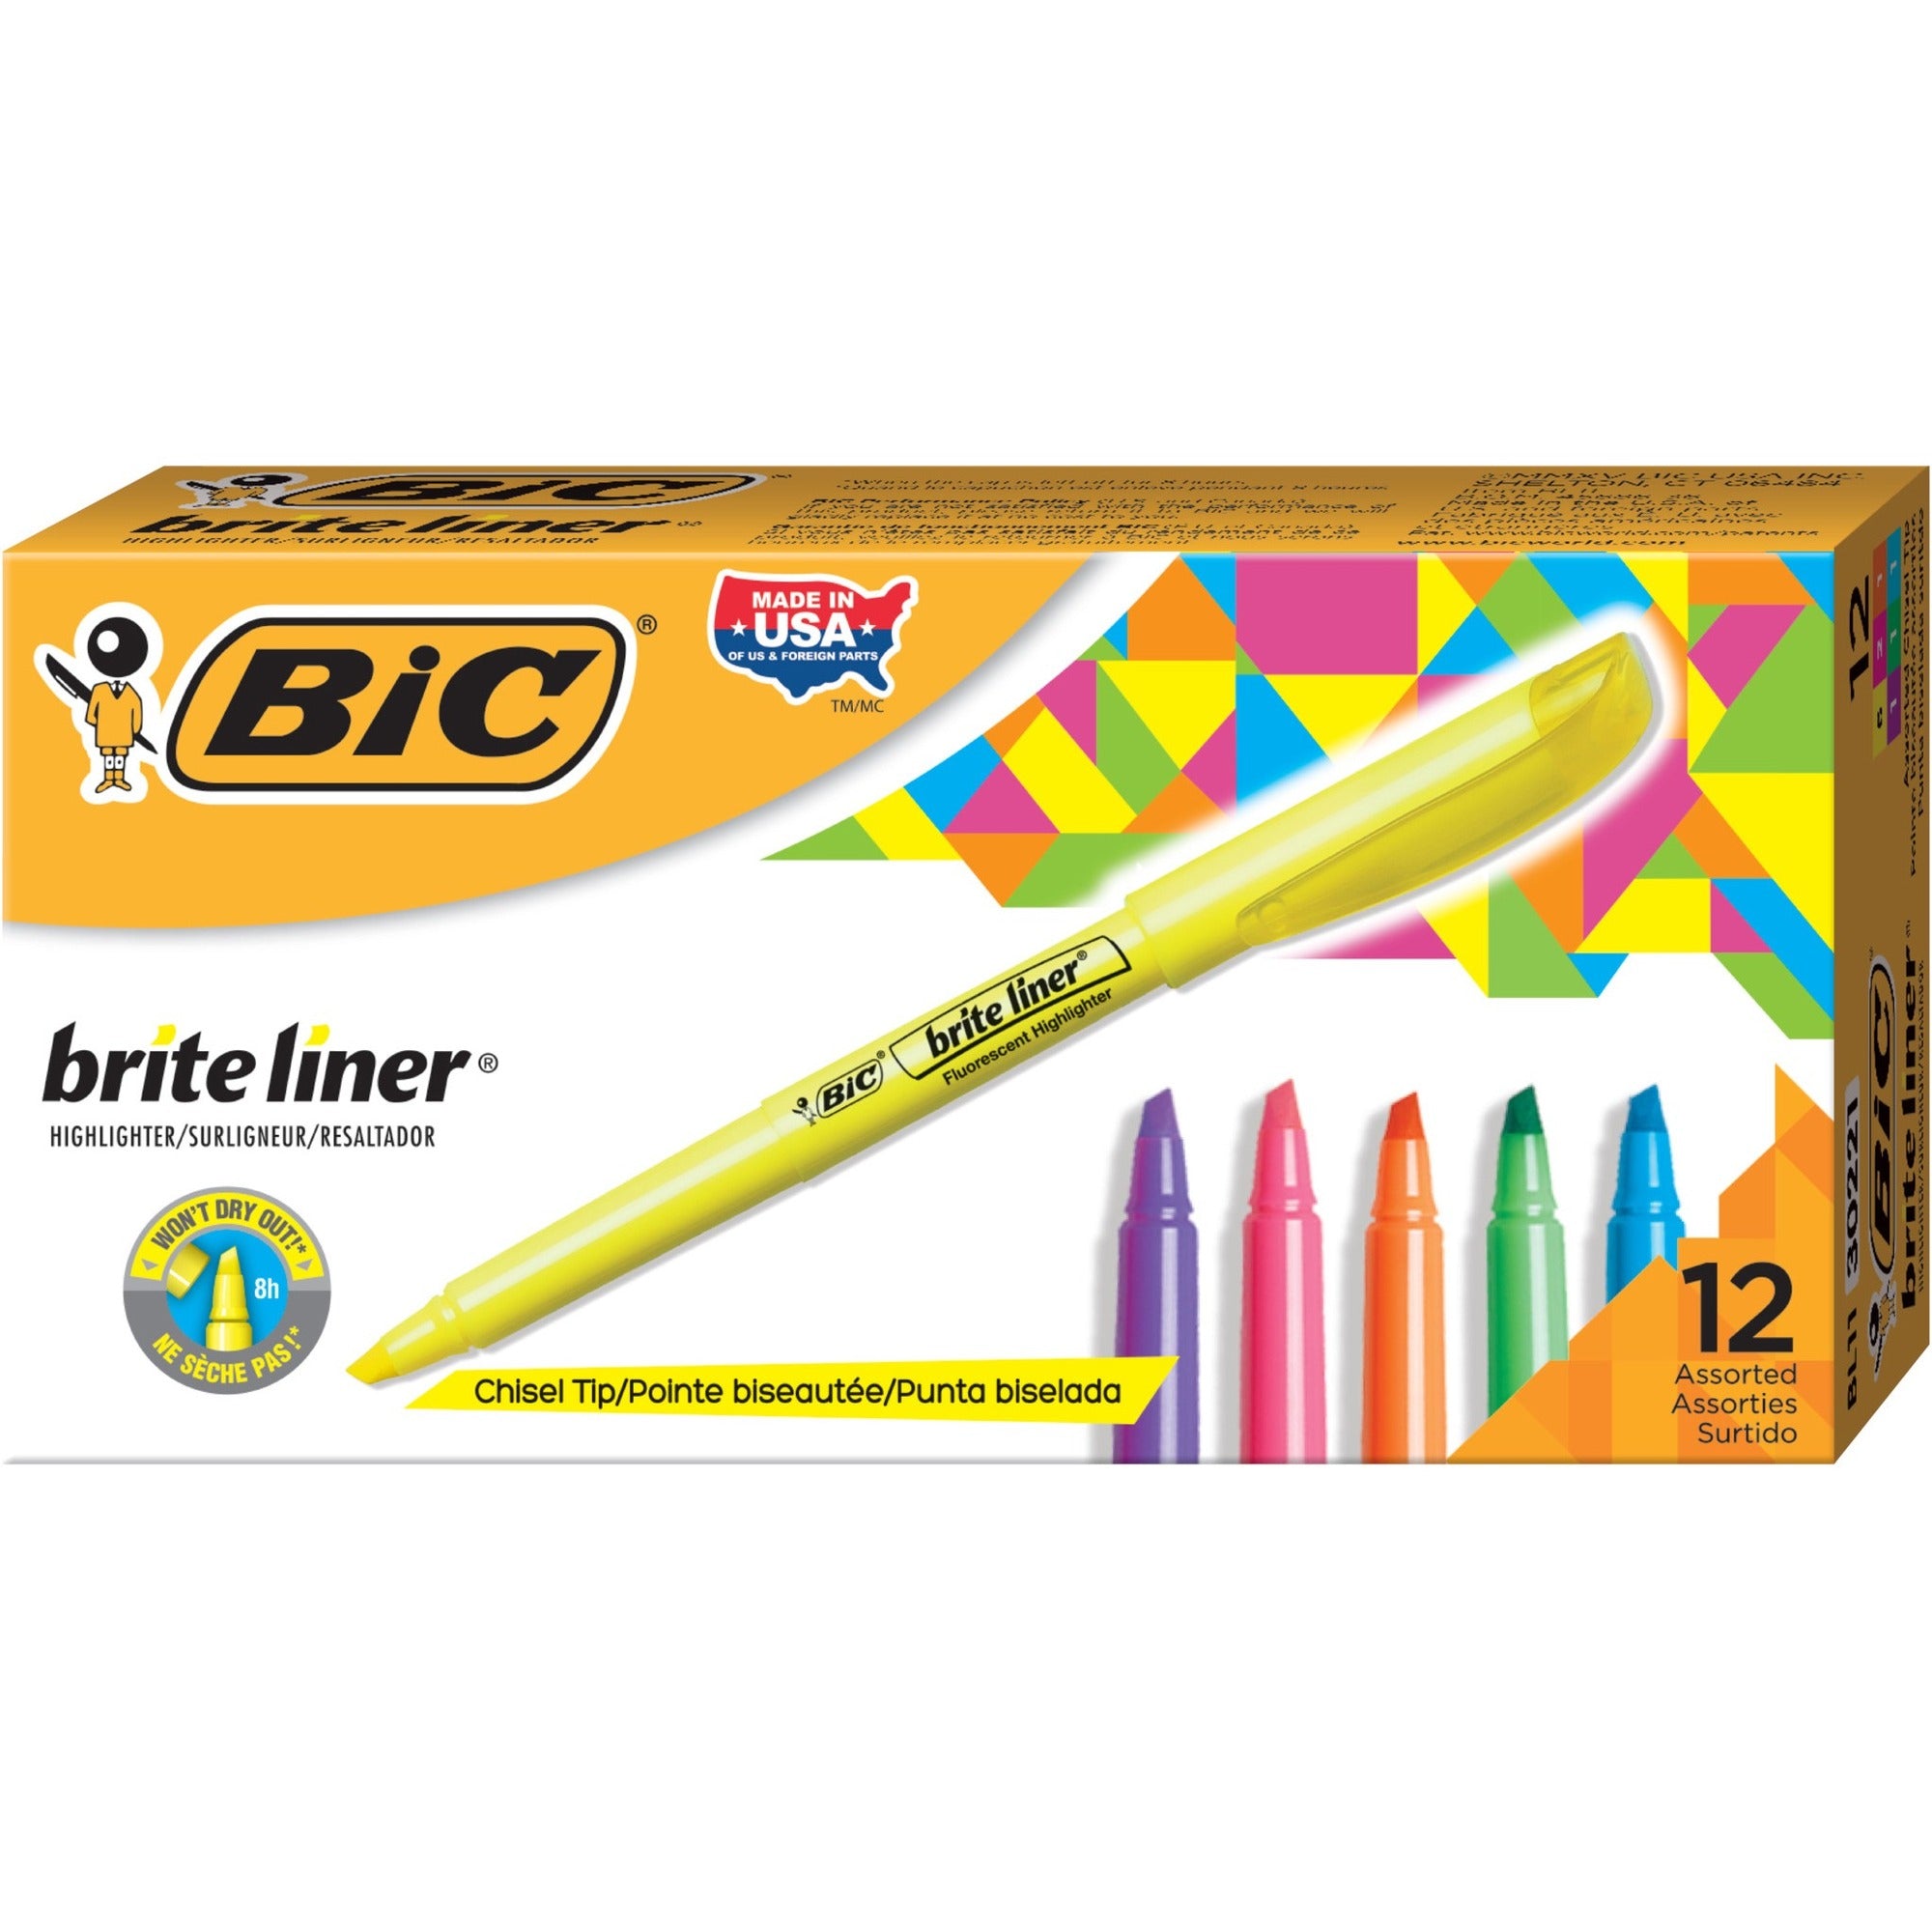 BIC Brite Liner Highlighter, Sold as 1 Box, 12 Each per Box - 1